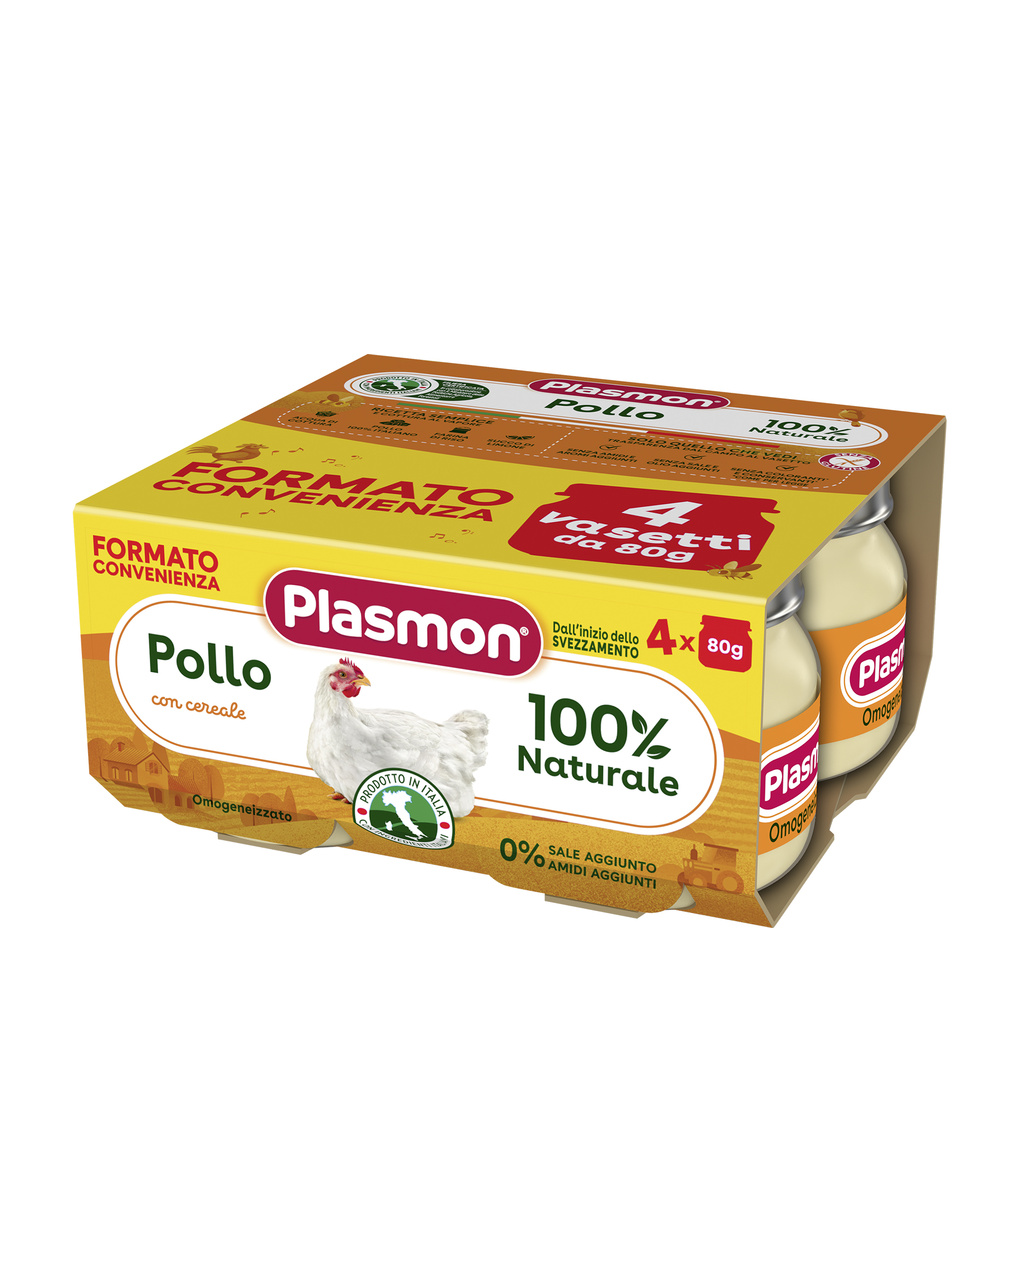 Plasmon - omogeneizzato pollo 4x80g